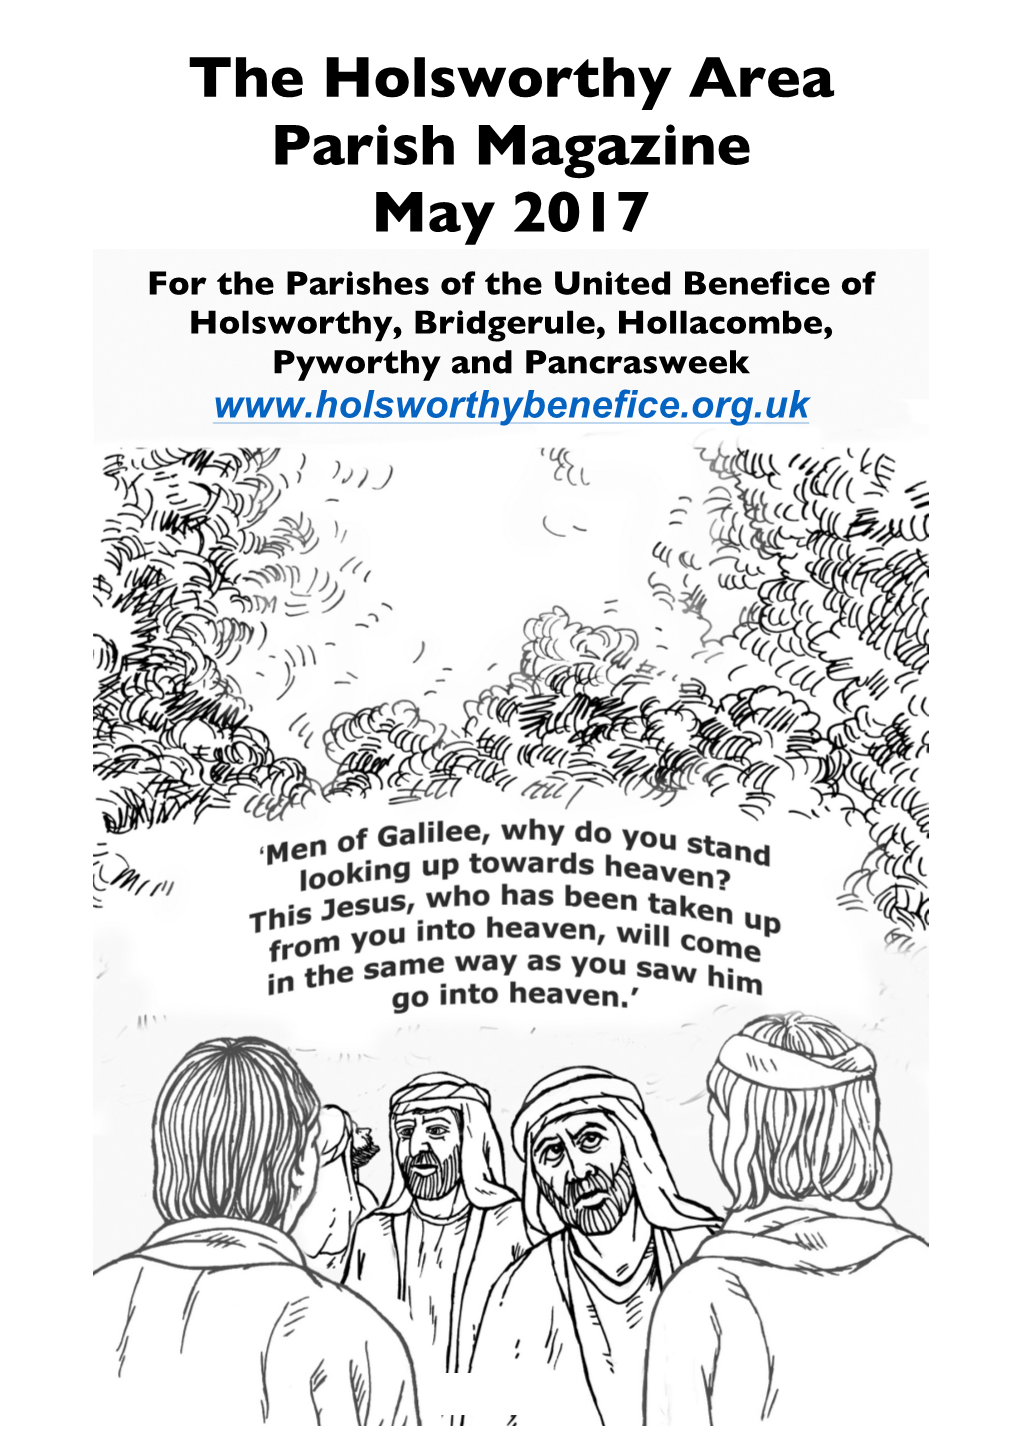 The Holsworthy Area Parish Magazine May 2017